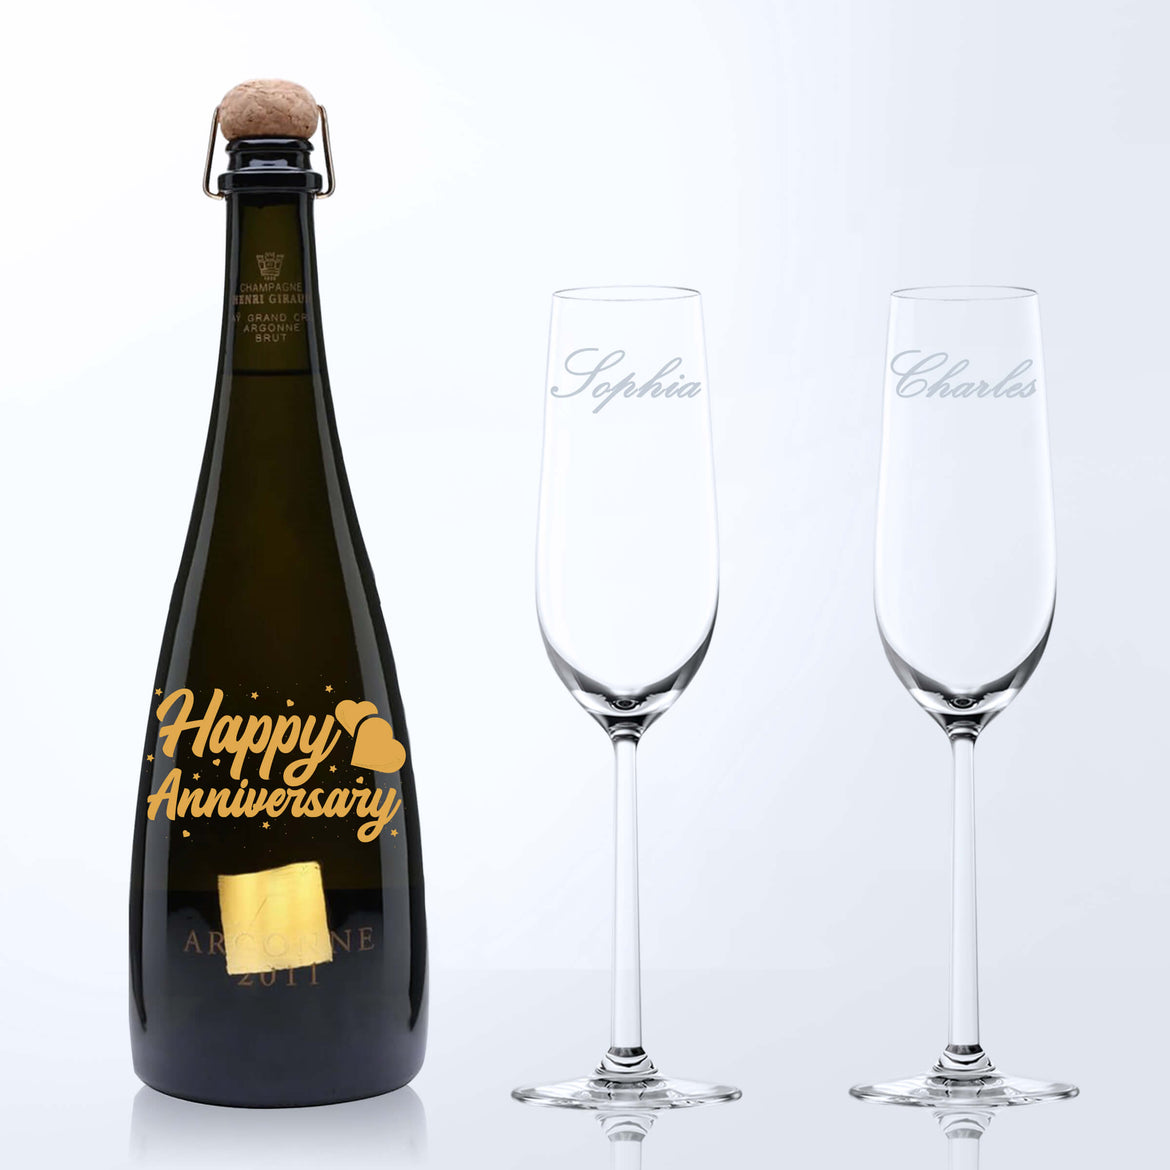 Henri Giraud Argonne rose 2011& Bottega Champagne Glasses Gift Set with Engraving |亨利吉羅2011年份橡木桶陳釀桃紅香檳&Bottega香檳杯套裝(含文字雕刻） - Design Your Own Wine